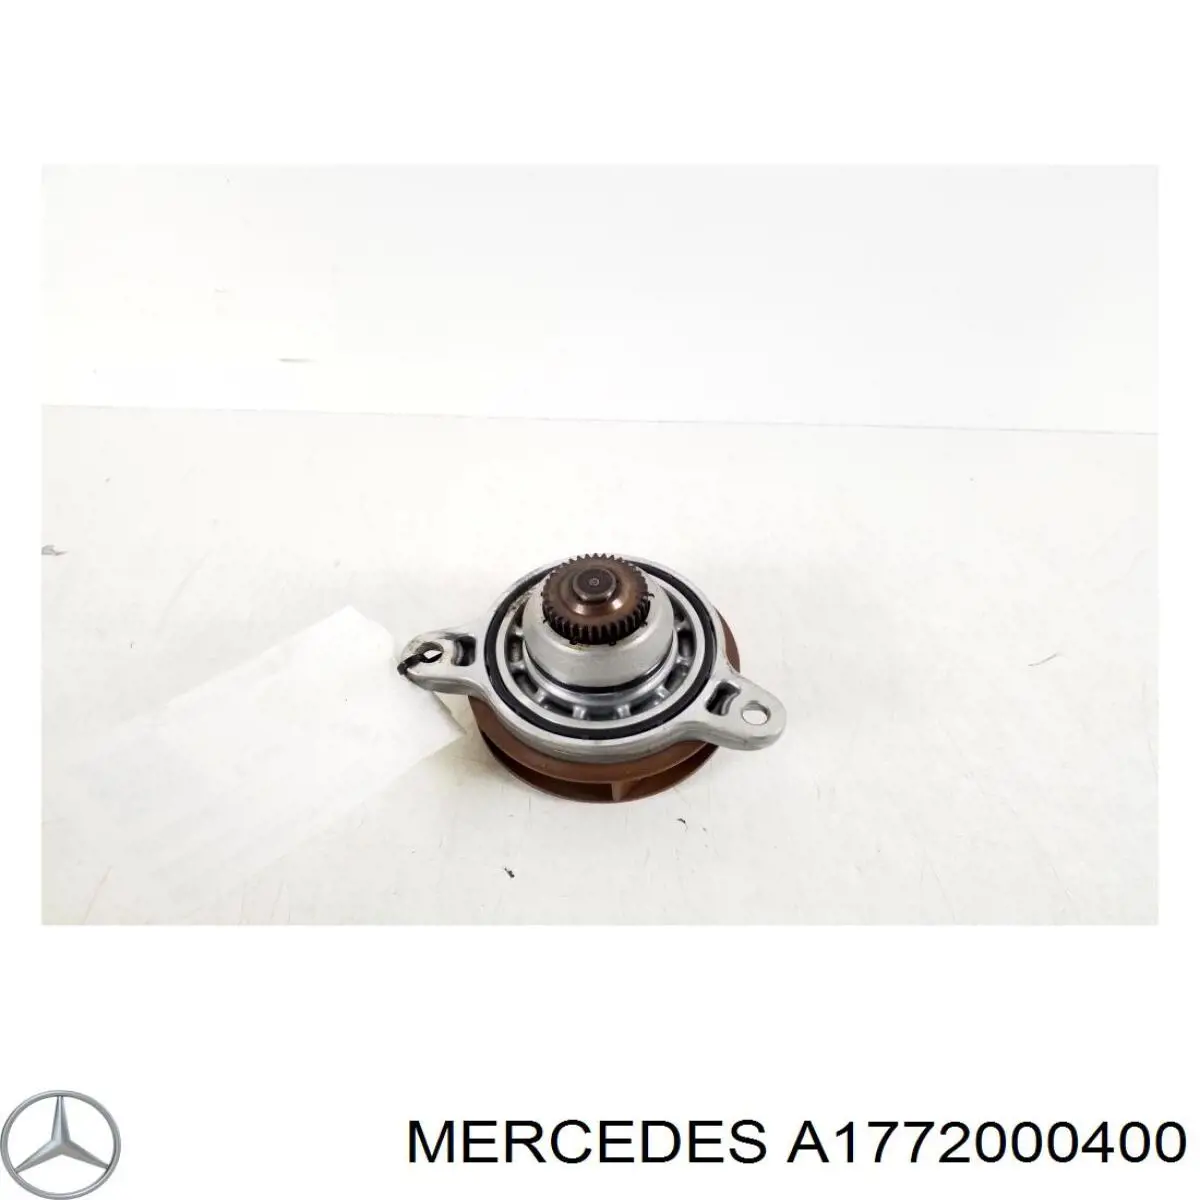 Bomba de esfriamento de pilha para Mercedes ML/GLE (W167)